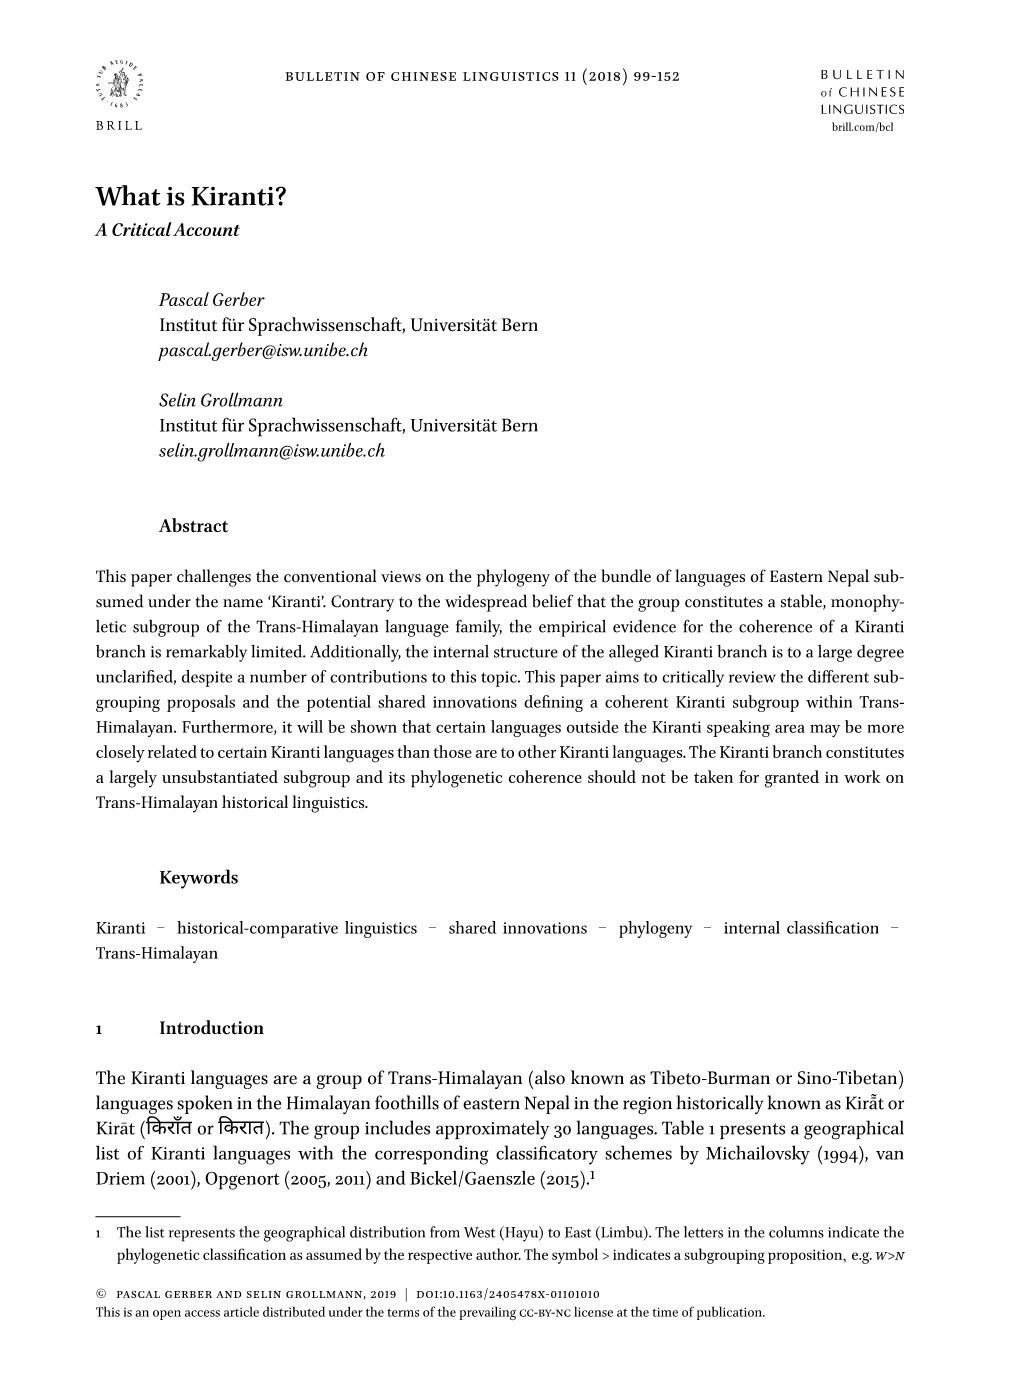 What Is Kiranti? a Critical Account